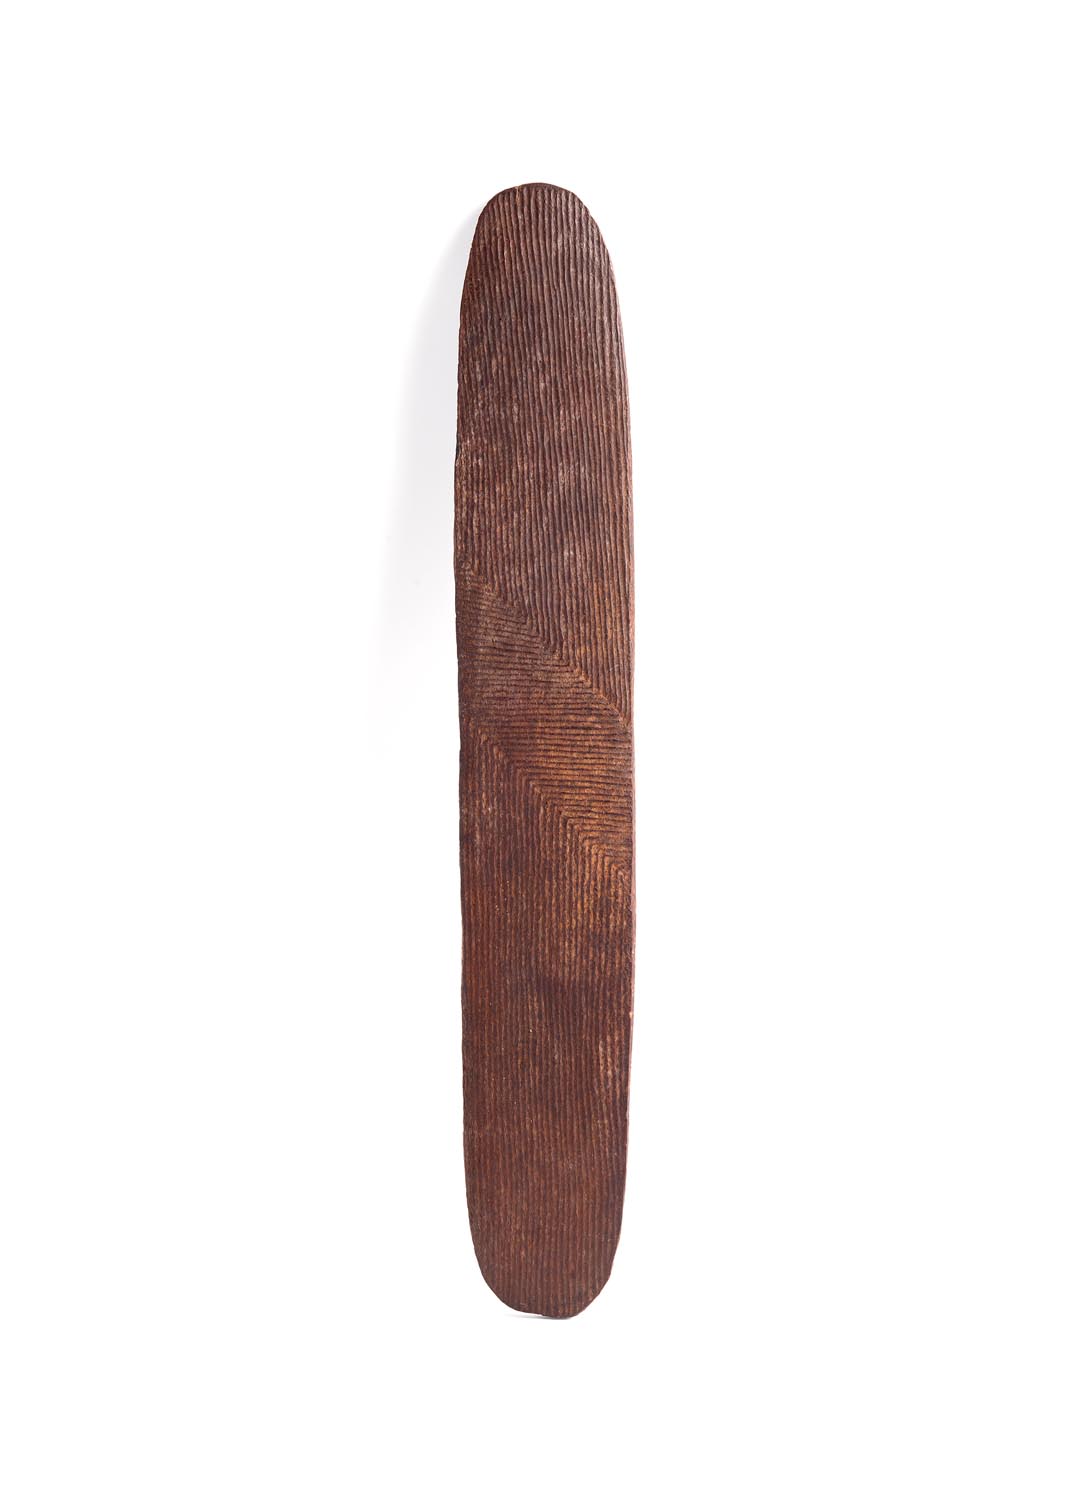 An Early Wunda Shield Western Australia (nineteenth century) carved wood 67.5cm high  PROVENANCE